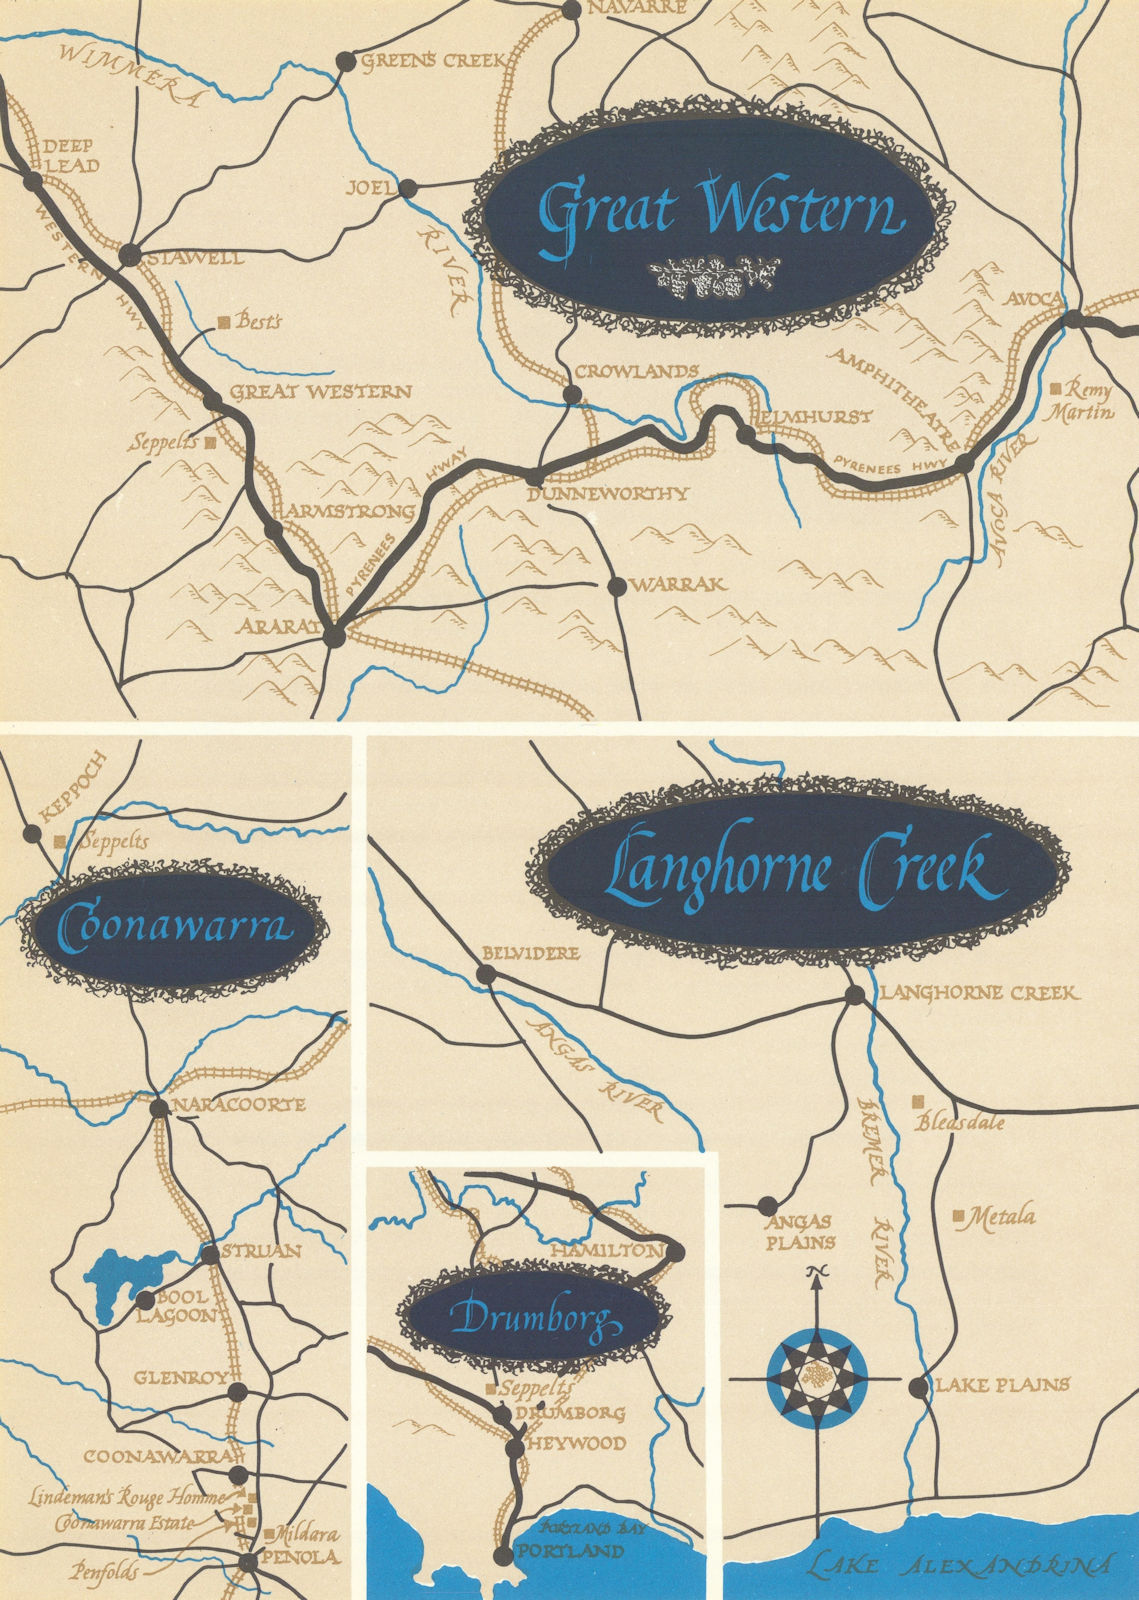 Great Western Coonawarra Langhorne Creek Henty Australia wineries 1966 old map